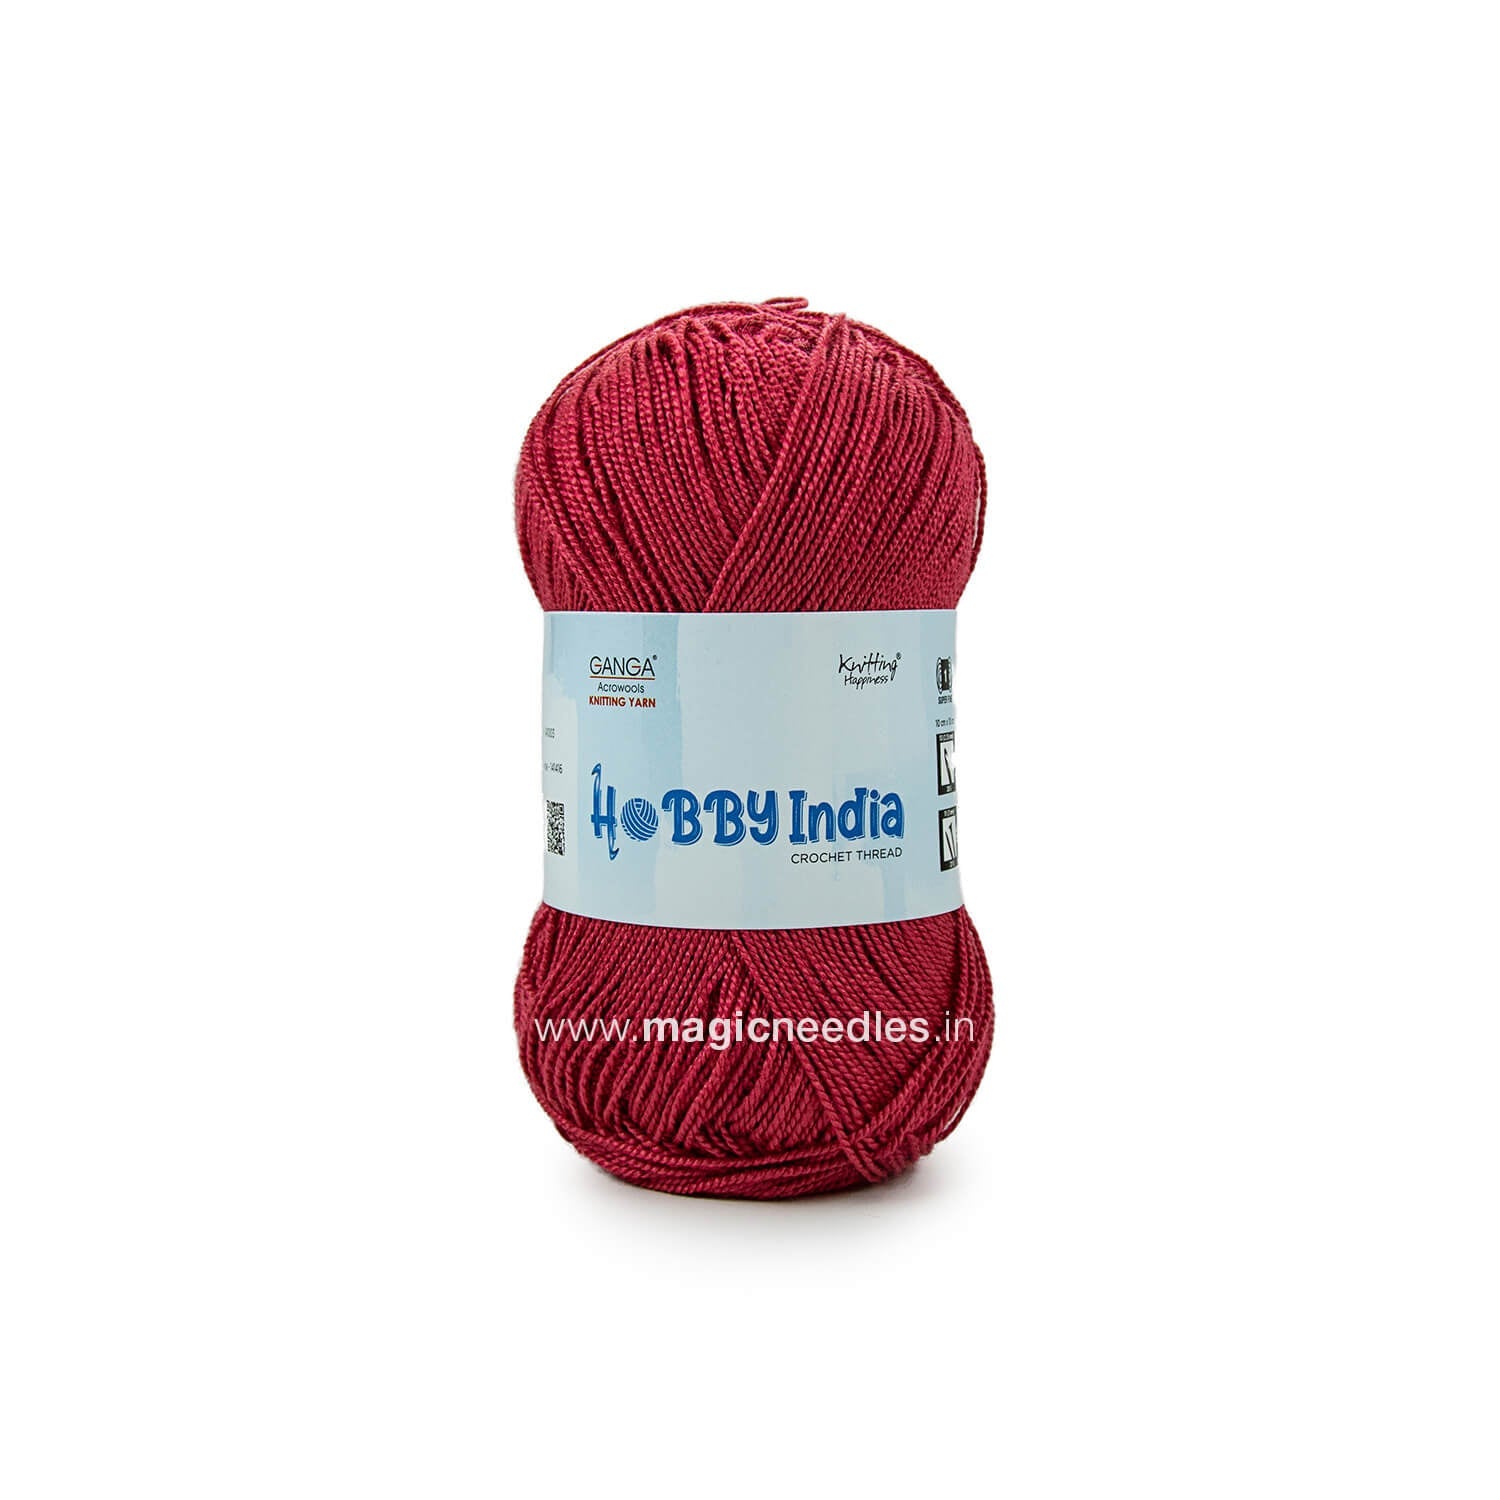 Ganga Hobby India Crochet Thread - Pink 14